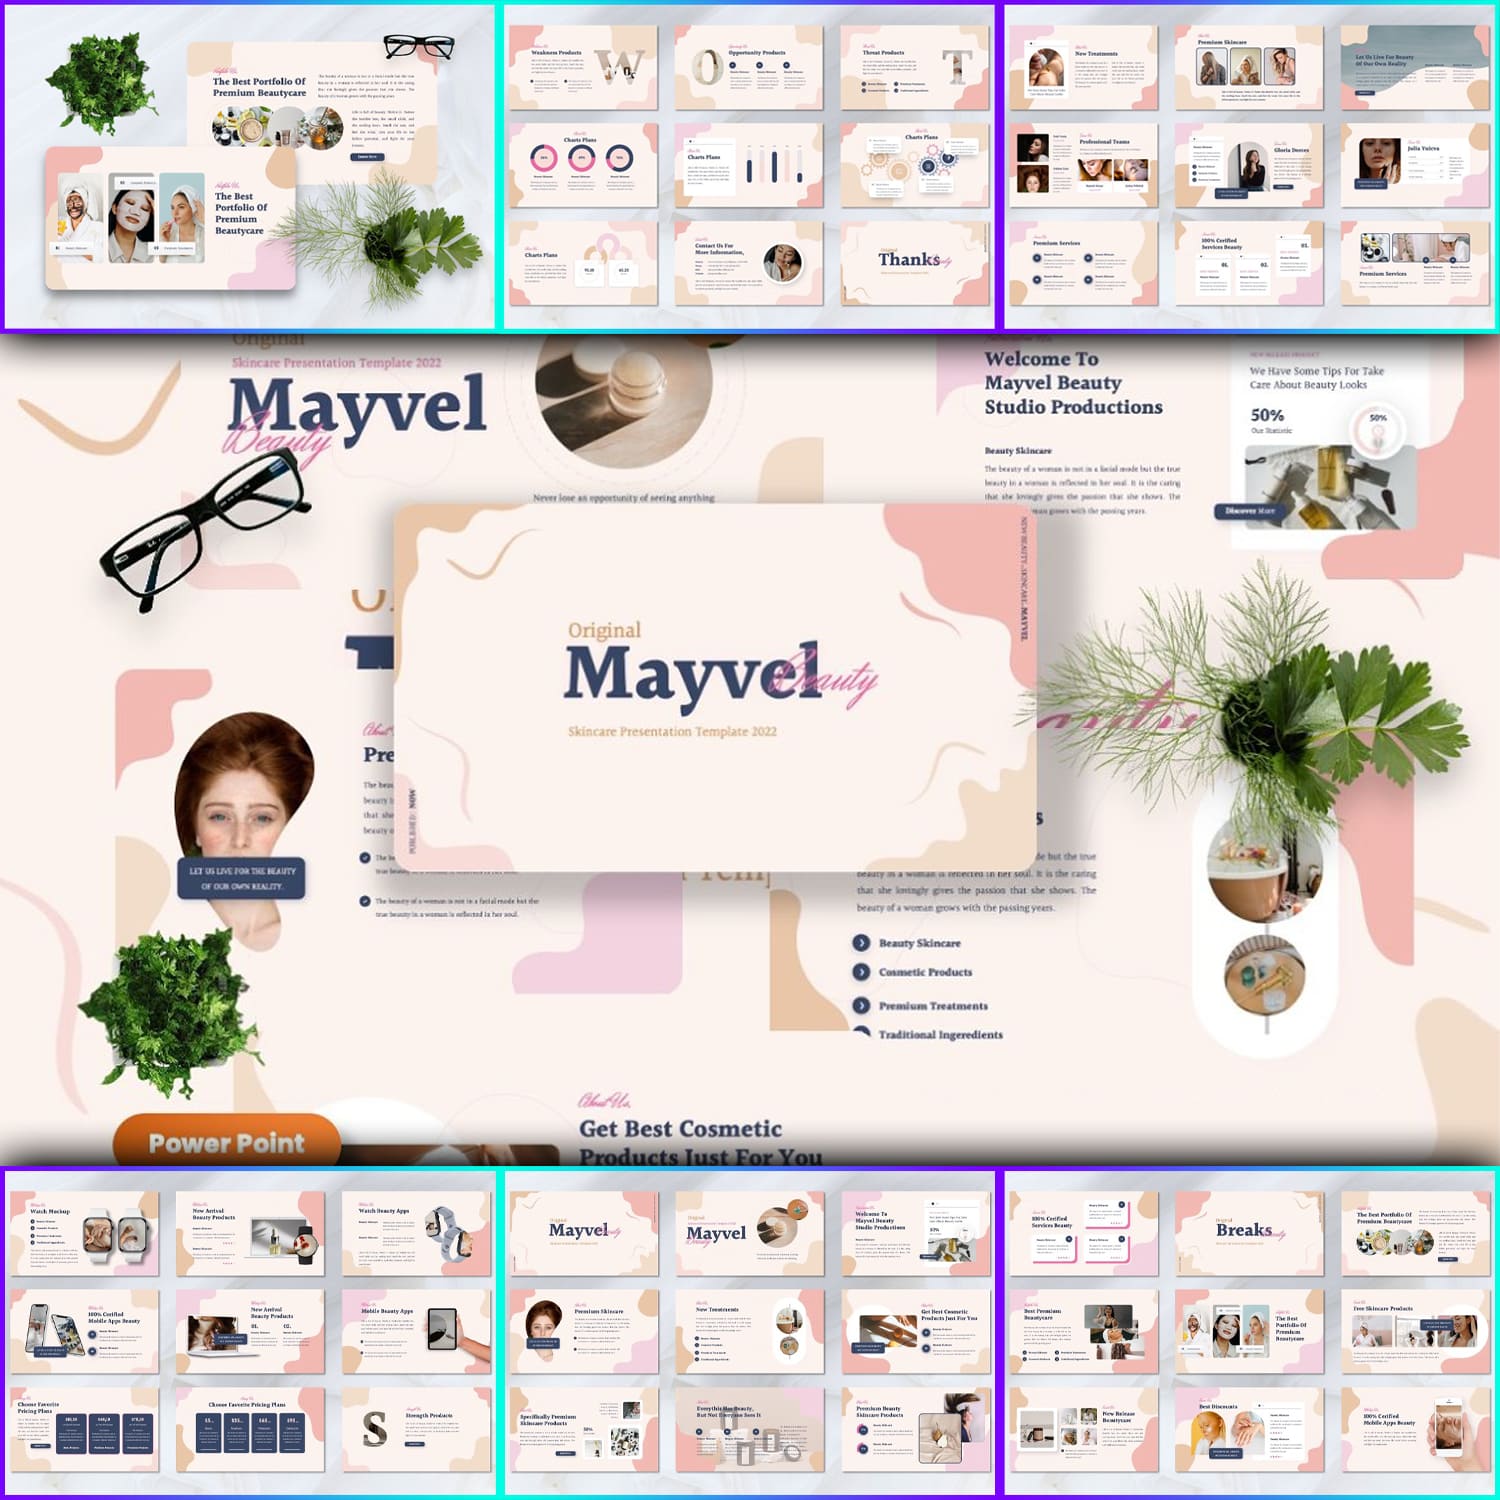 All slides of Original Mayvel beauty skincare presentation template.